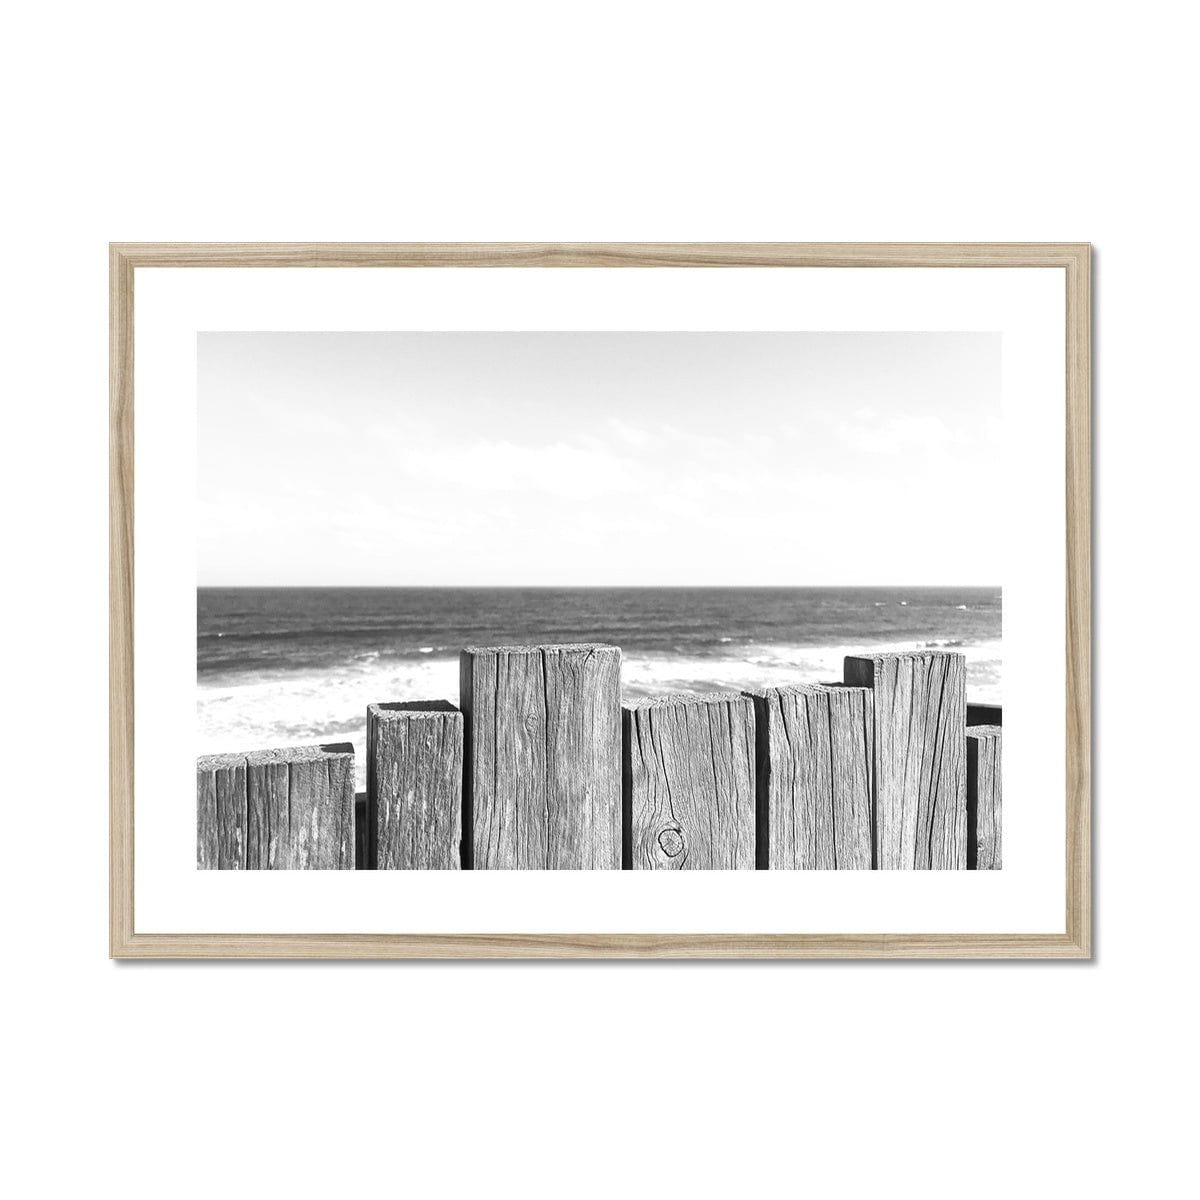 Adam Davies Framed 28"x20" / Natural Frame Black & White Beach Fence Framed & Mounted Print